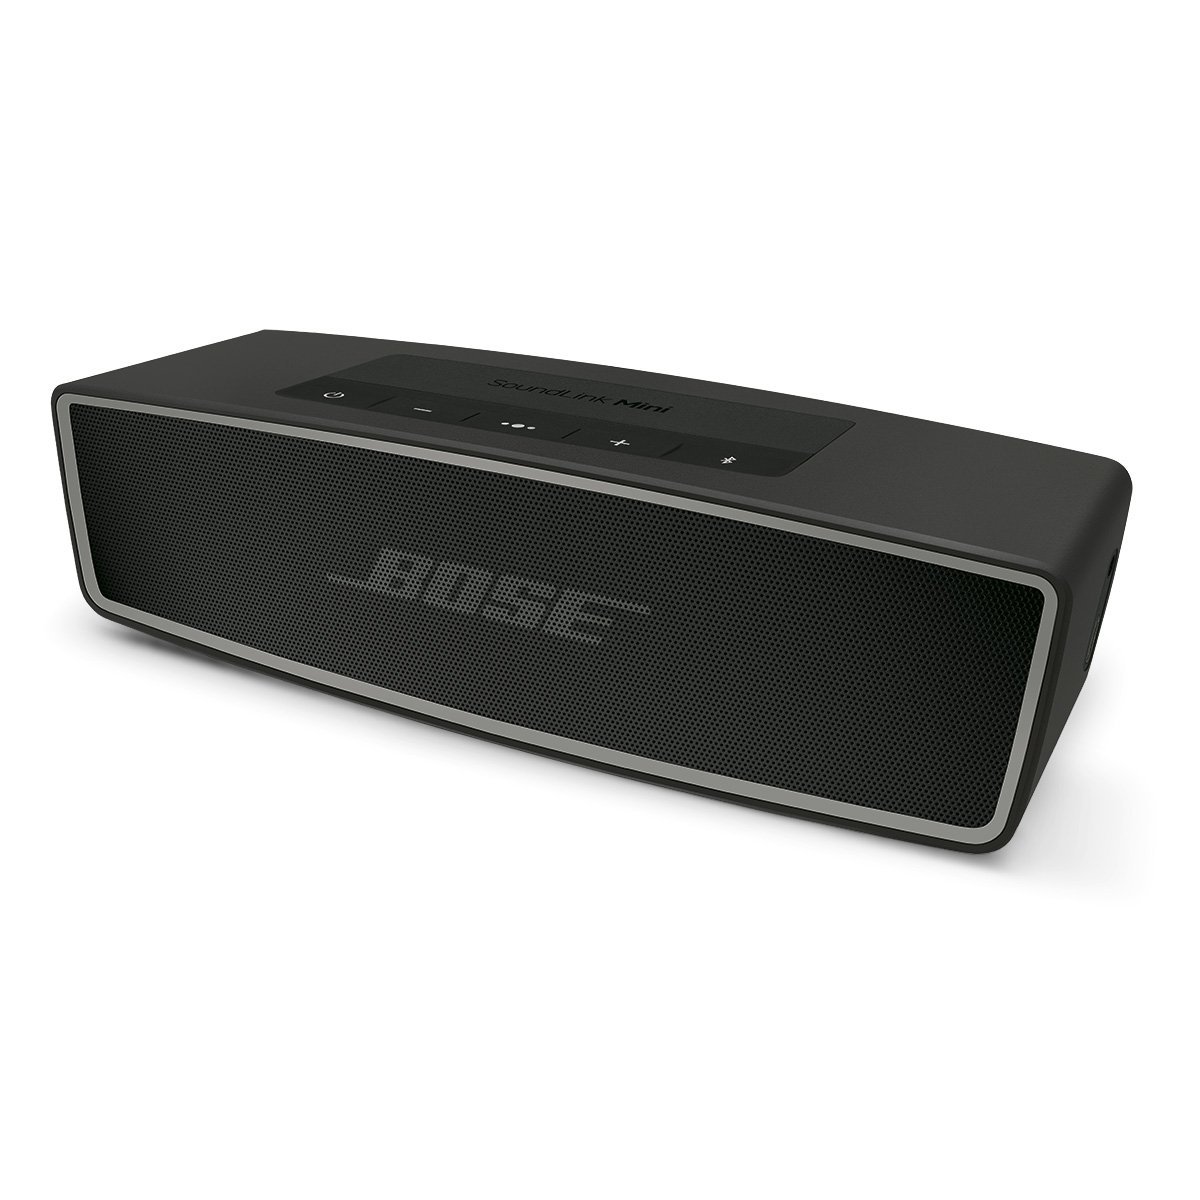 A.2 Bose® SoundLink®